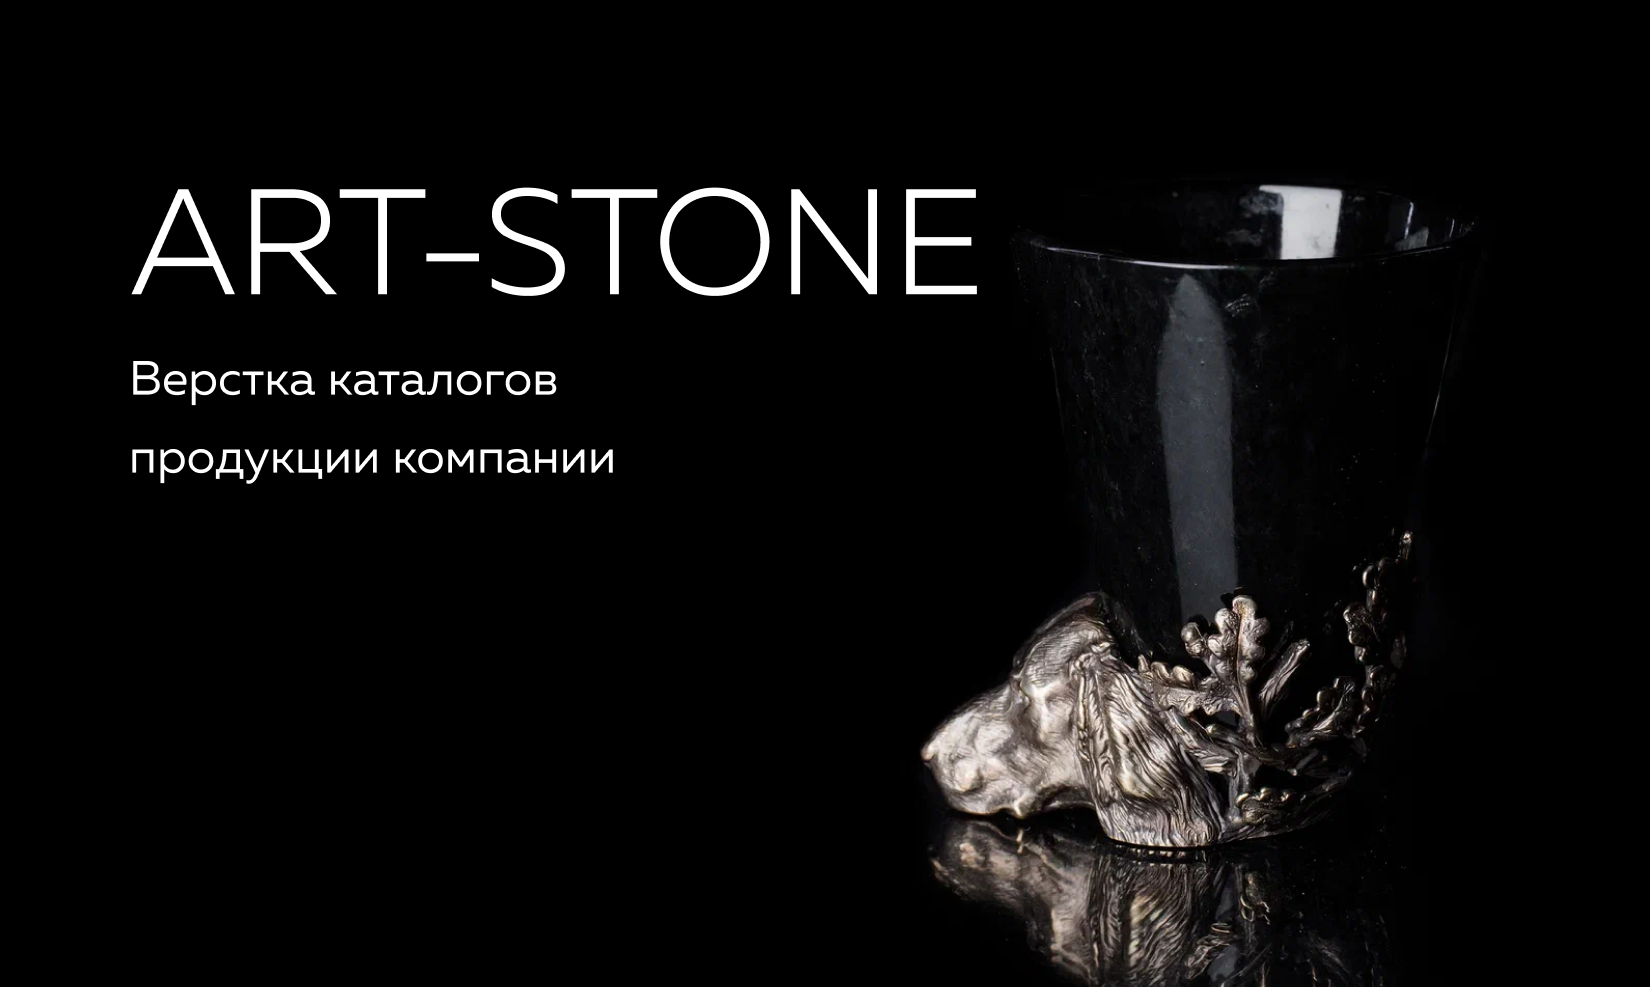 Art-stone